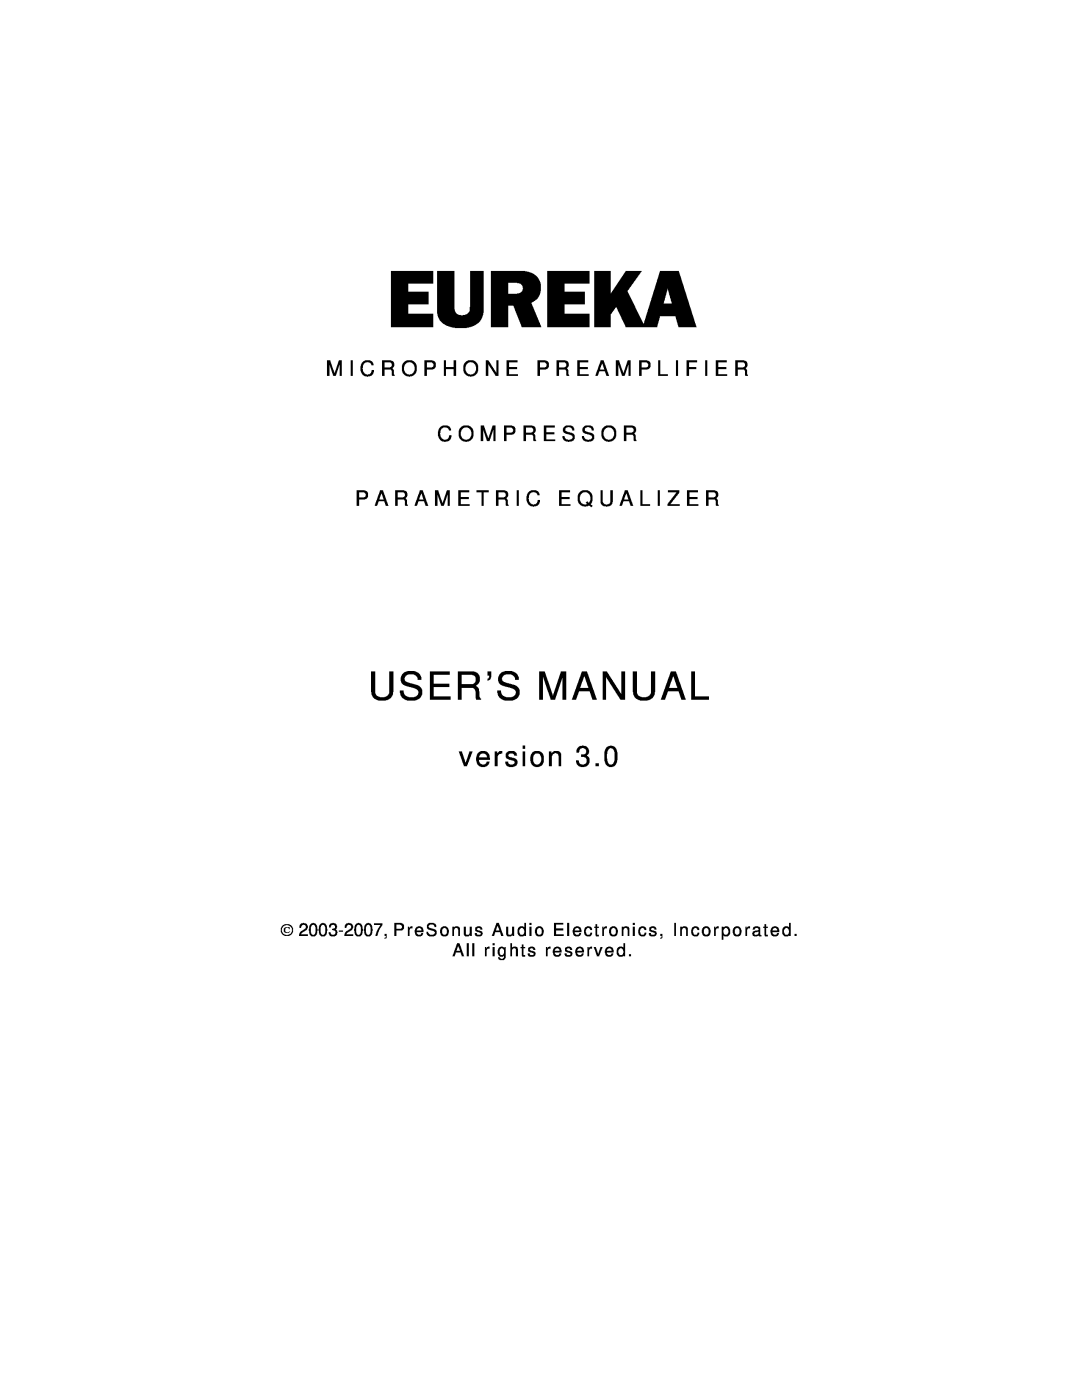 Eureka Microphone Preamplifier user manual version, M I C R O P H O N E P R E A M P L I F I E R, C O M P R E S S O R 